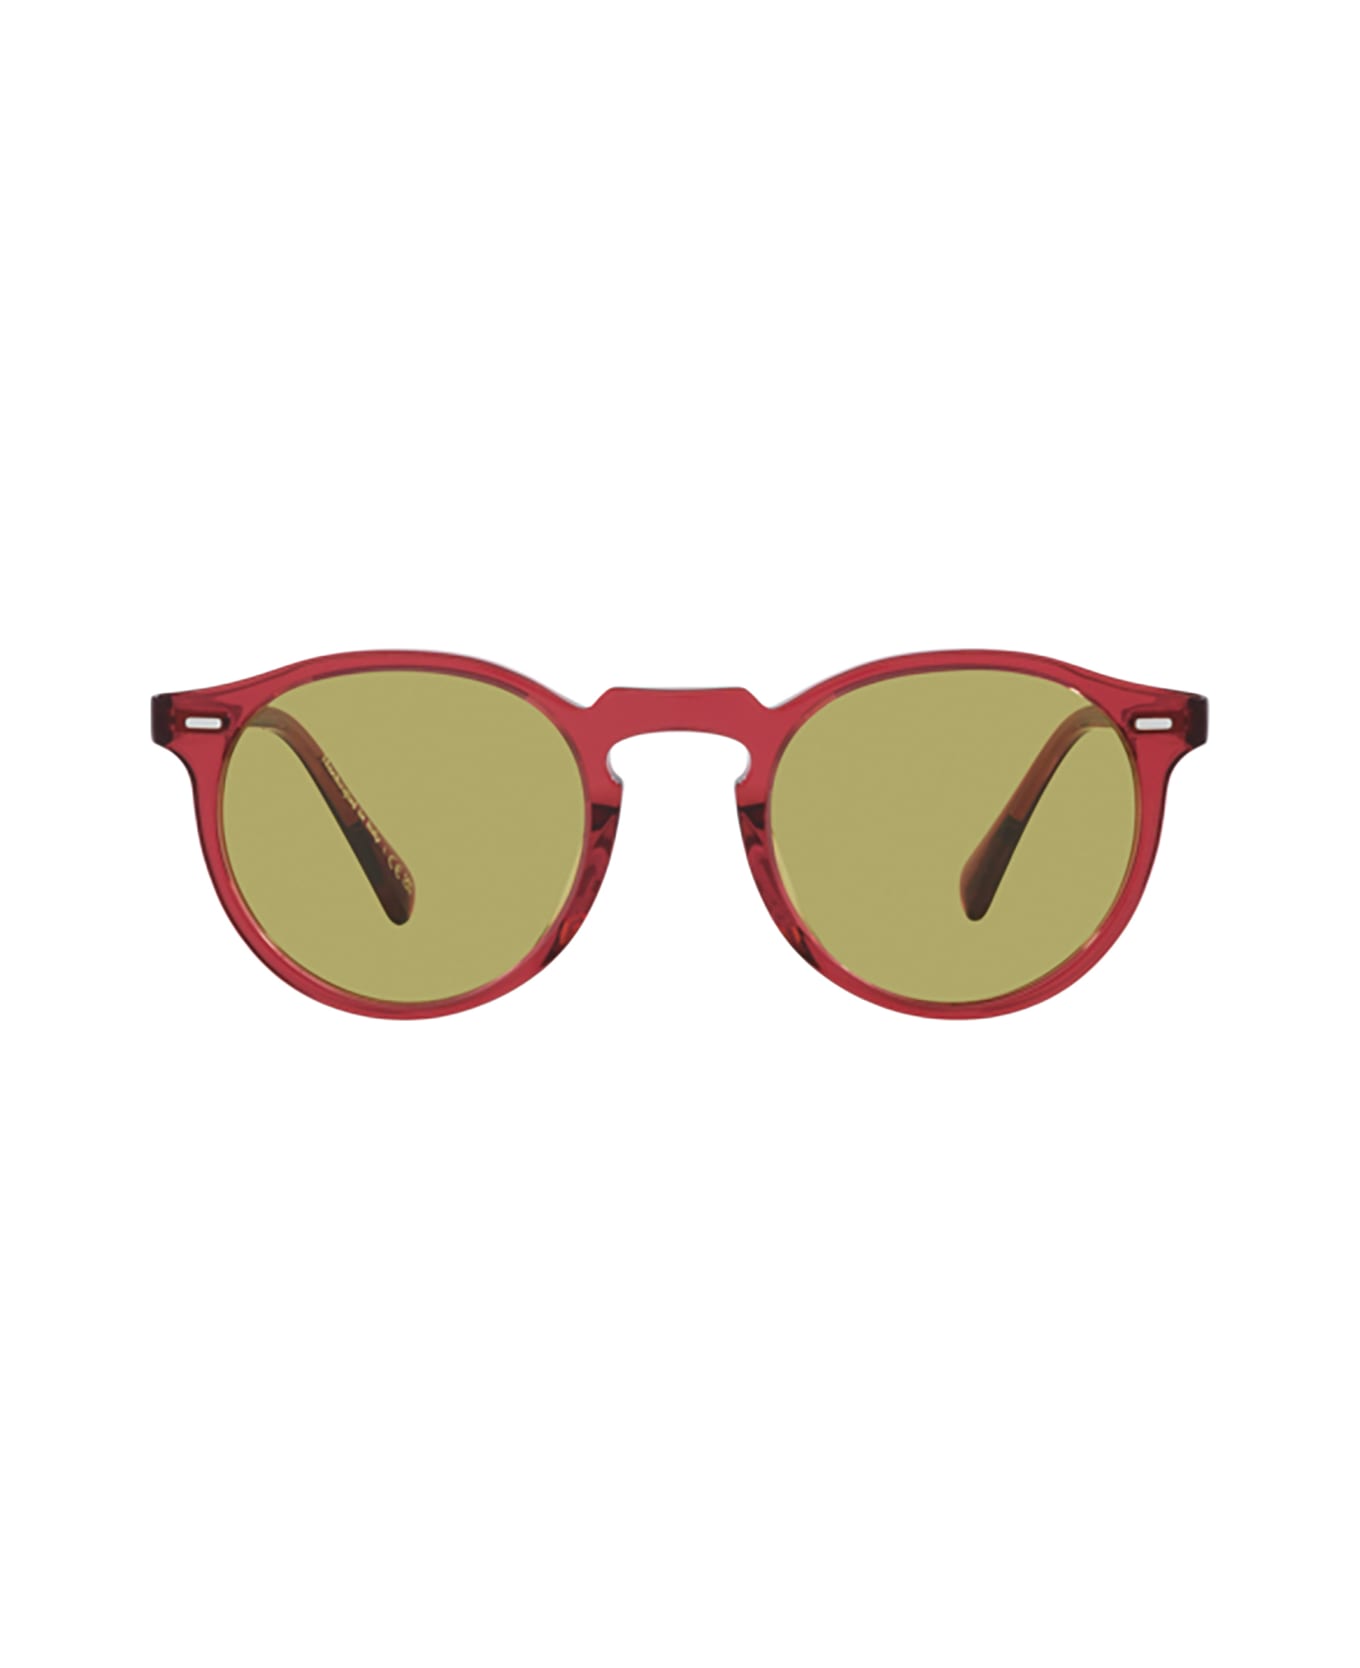 Oliver Peoples Ov5217s Translucent Rust Sunglasses - Translucent Rust サングラス